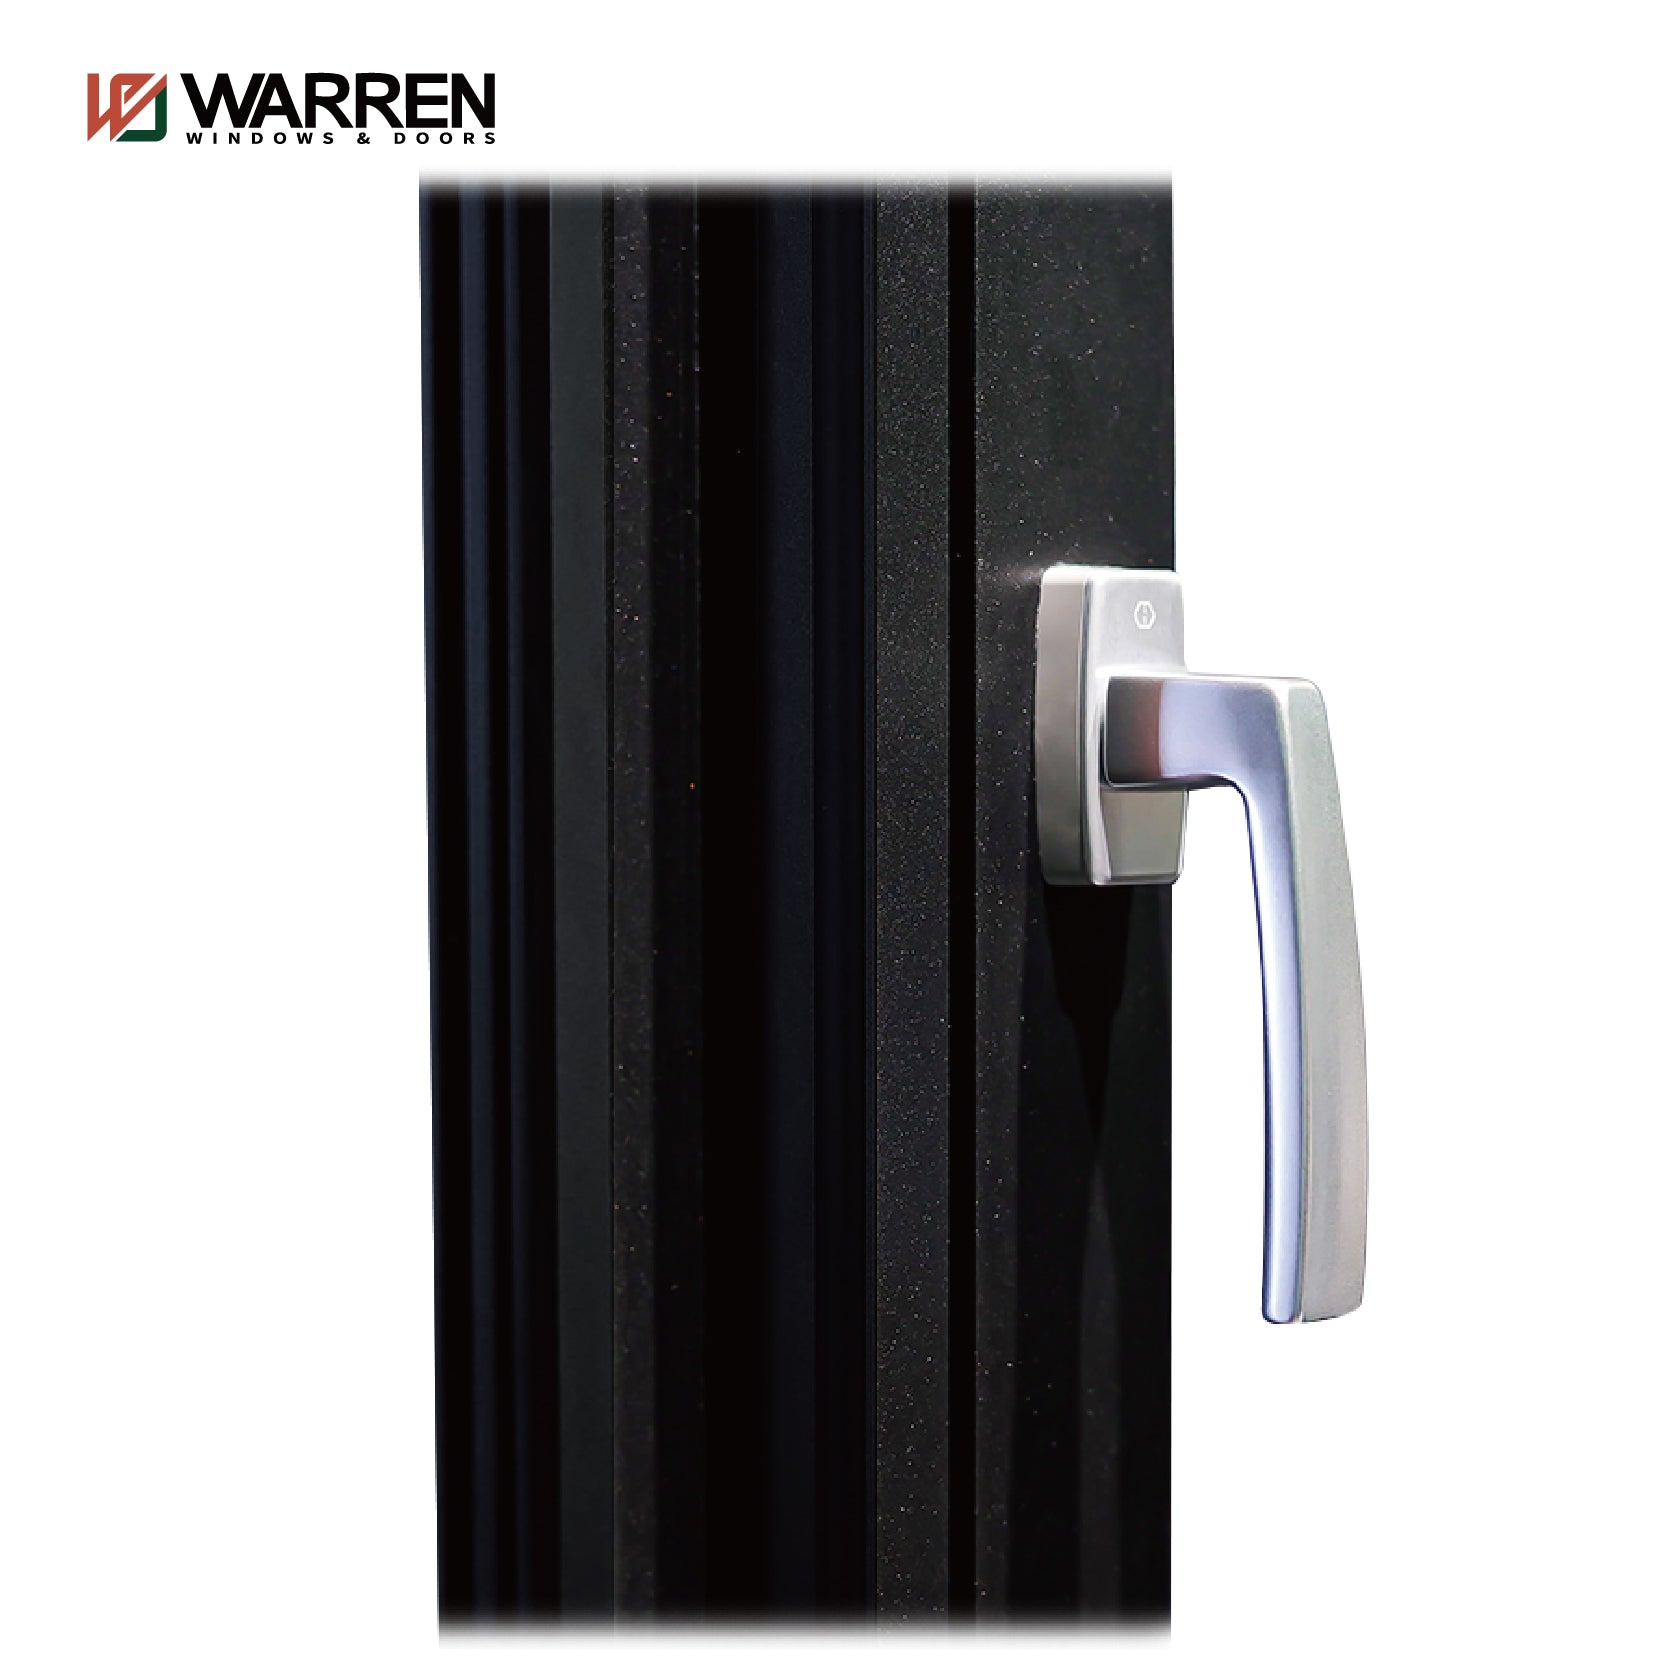 Warren Customized Professional Aluminum Tempered Glass Stylish Screen Windows Casement Window For Home Double Pane